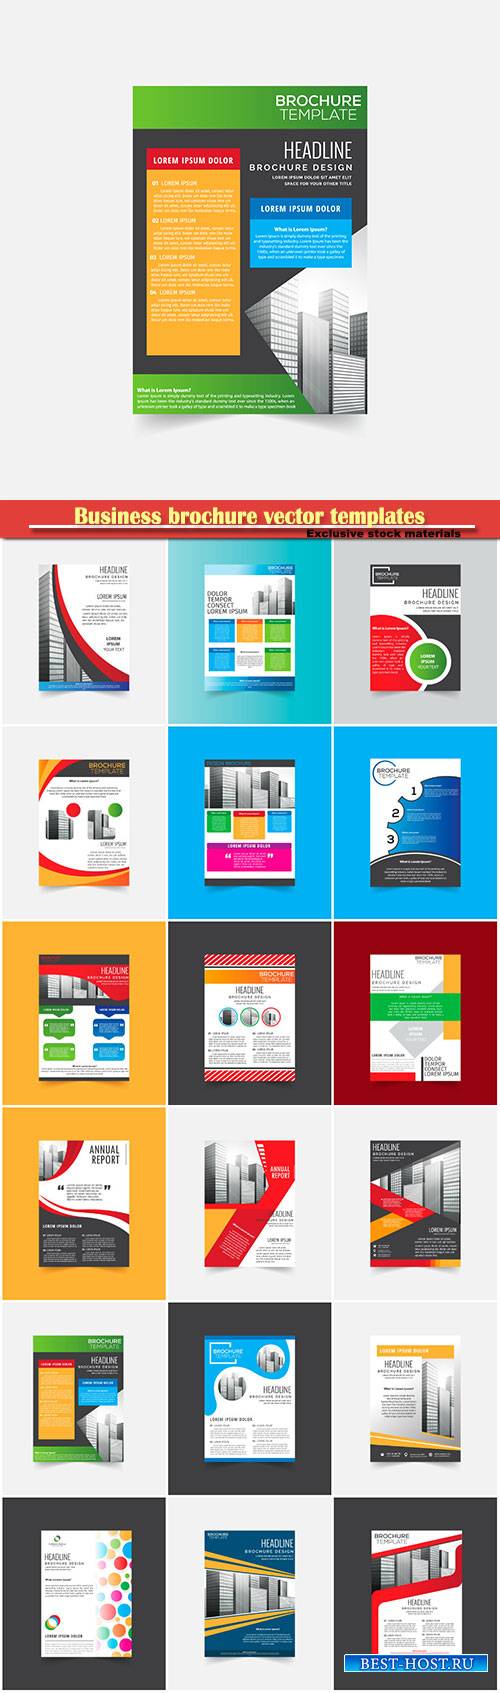 Business brochure vector templates, magazine cover, business mockup, education, presentation, report # 73